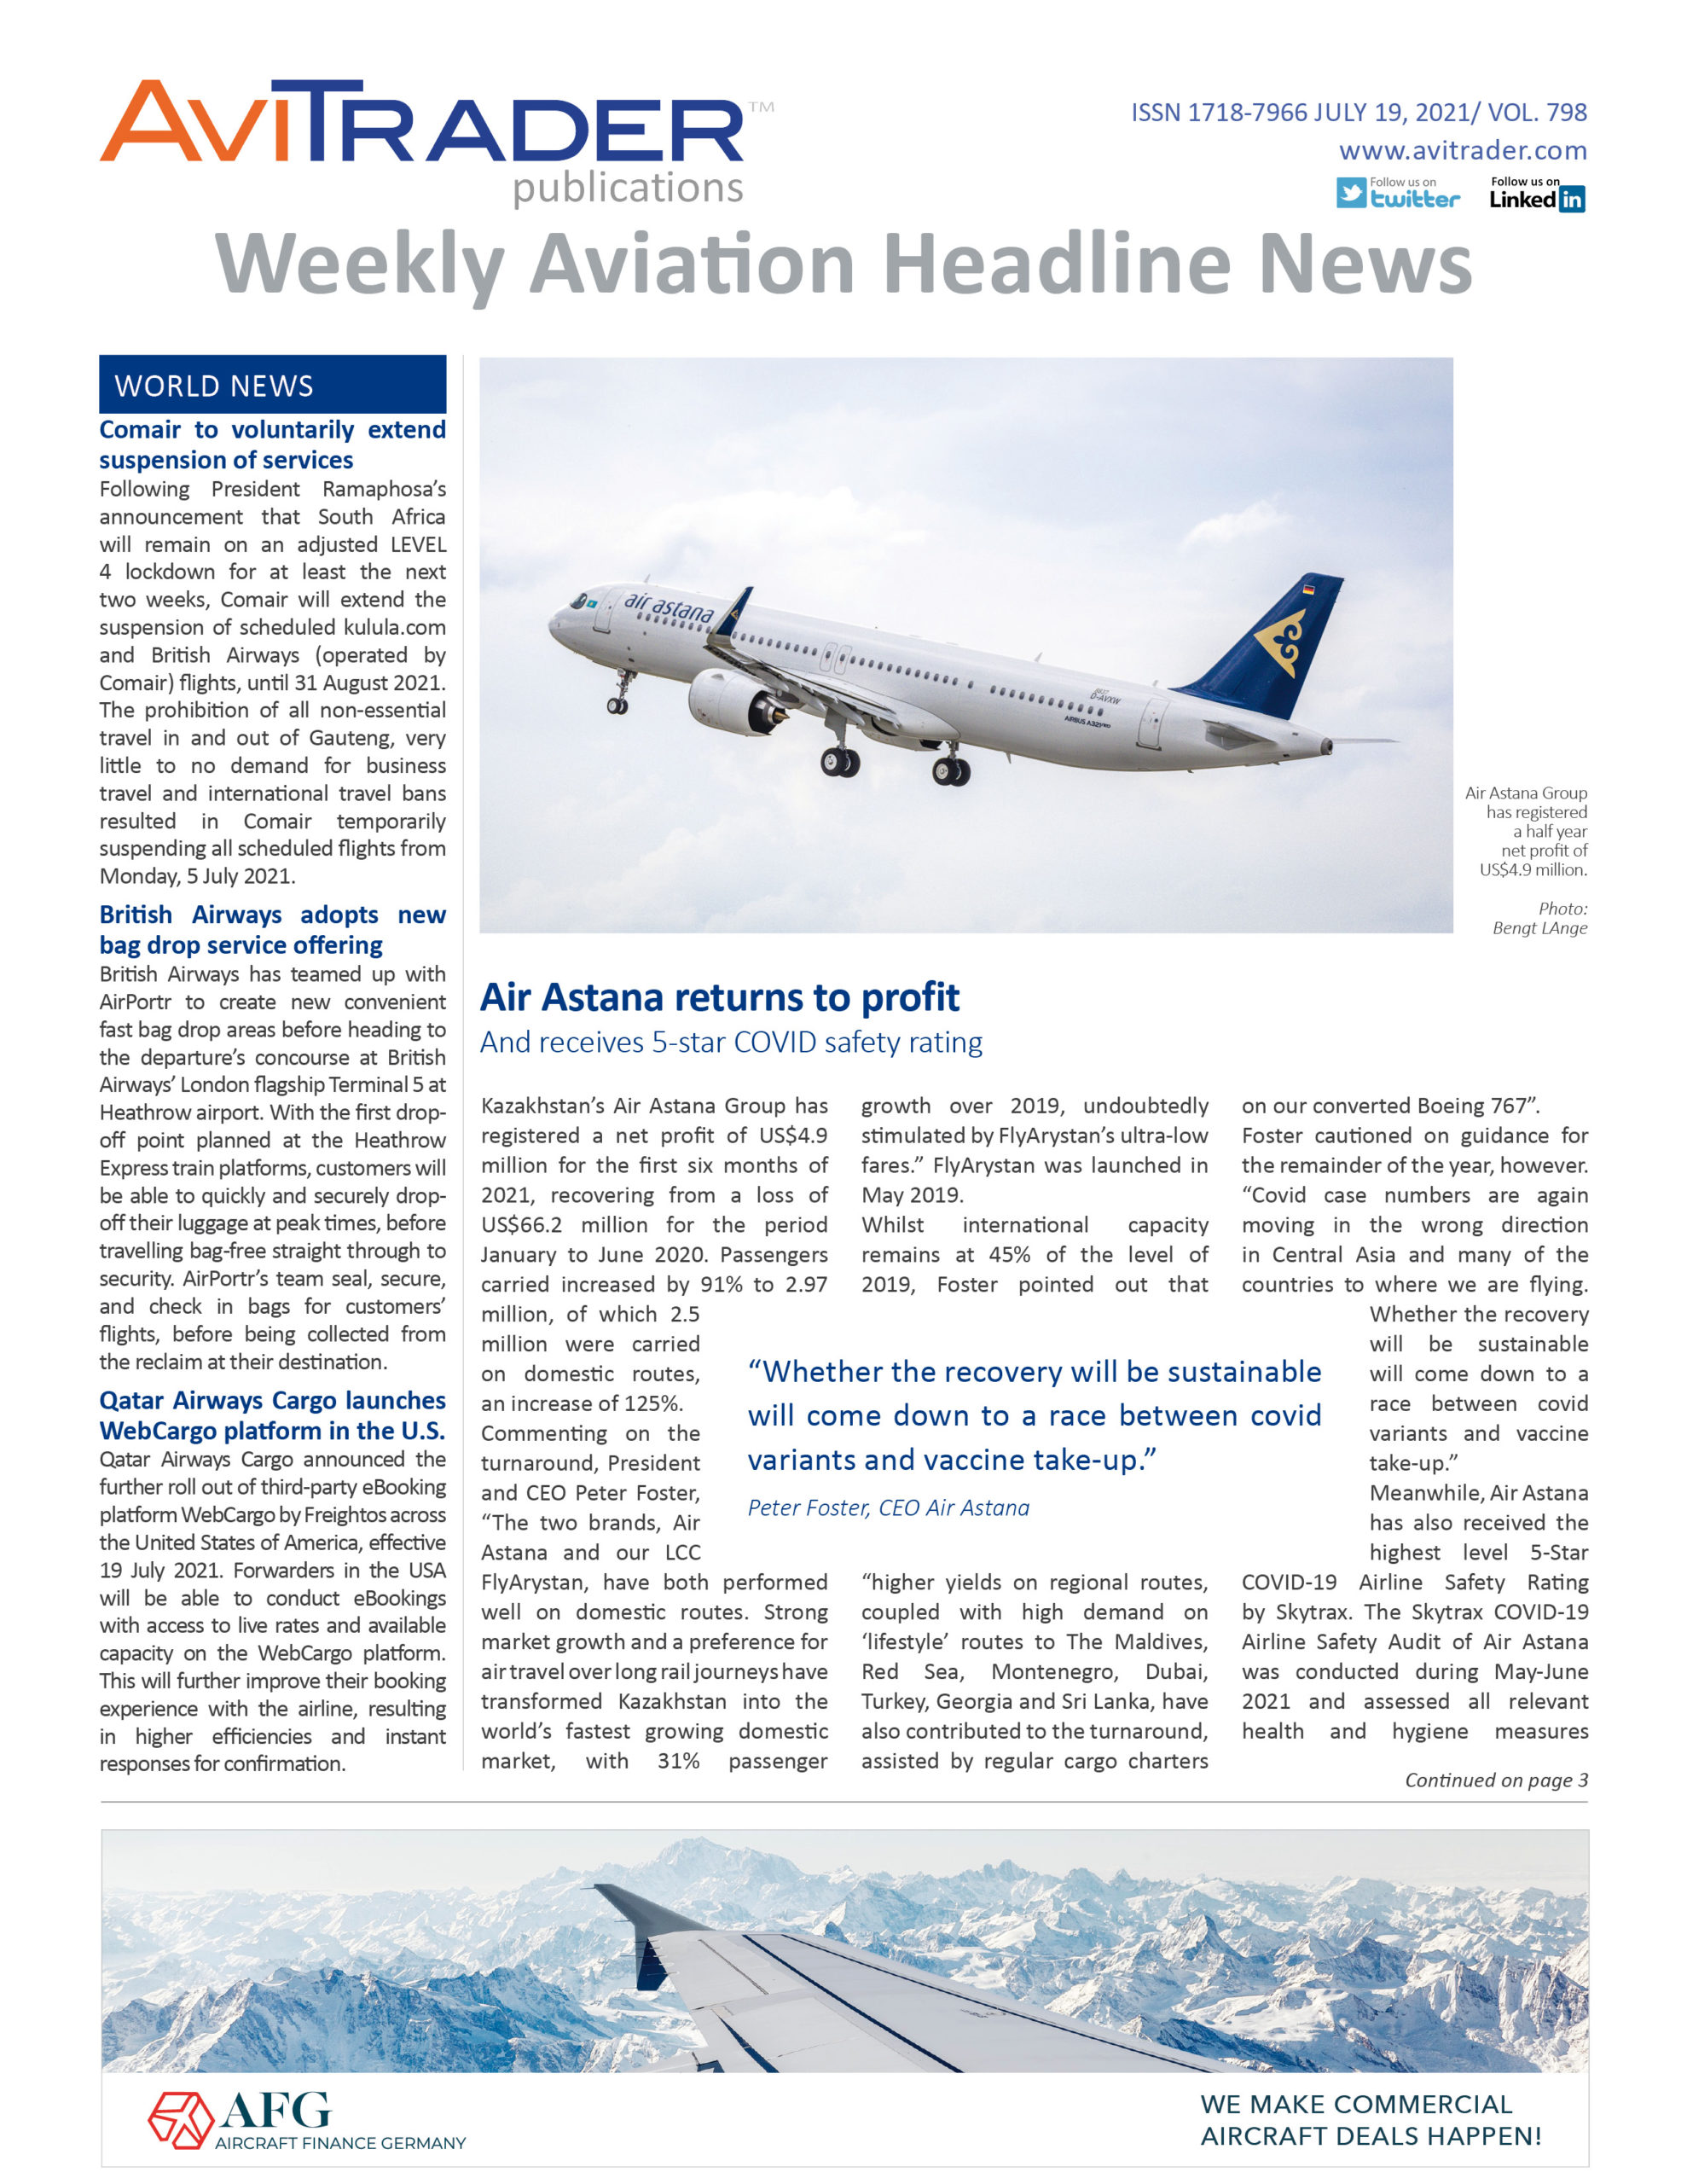 AviTrader_Weekly_Headline_News_Cover_2021-07-19